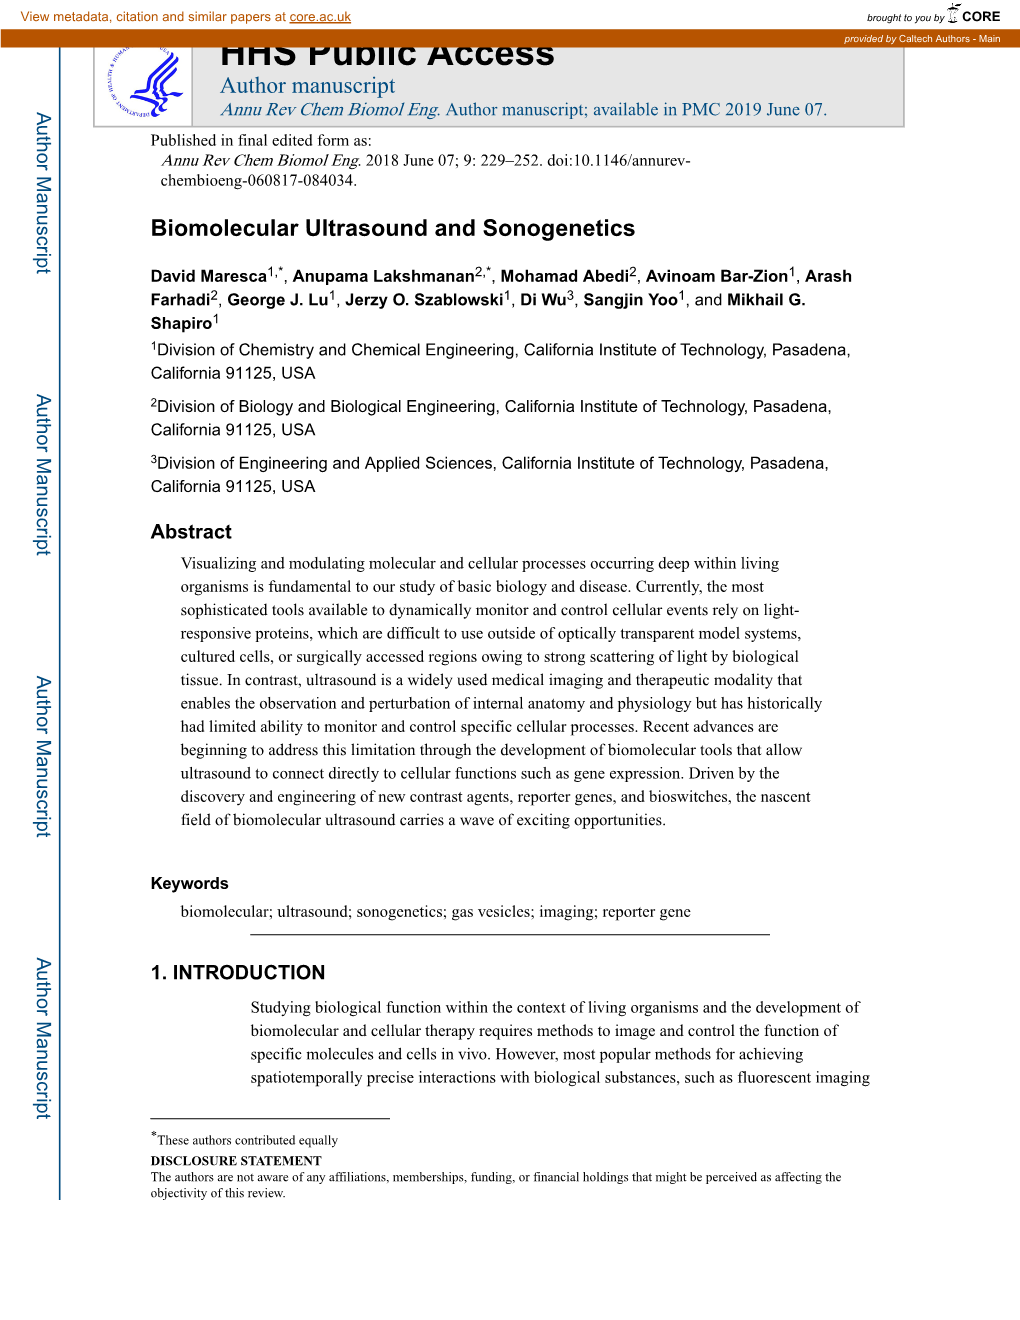 Biomolecular Ultrasound and Sonogenetics